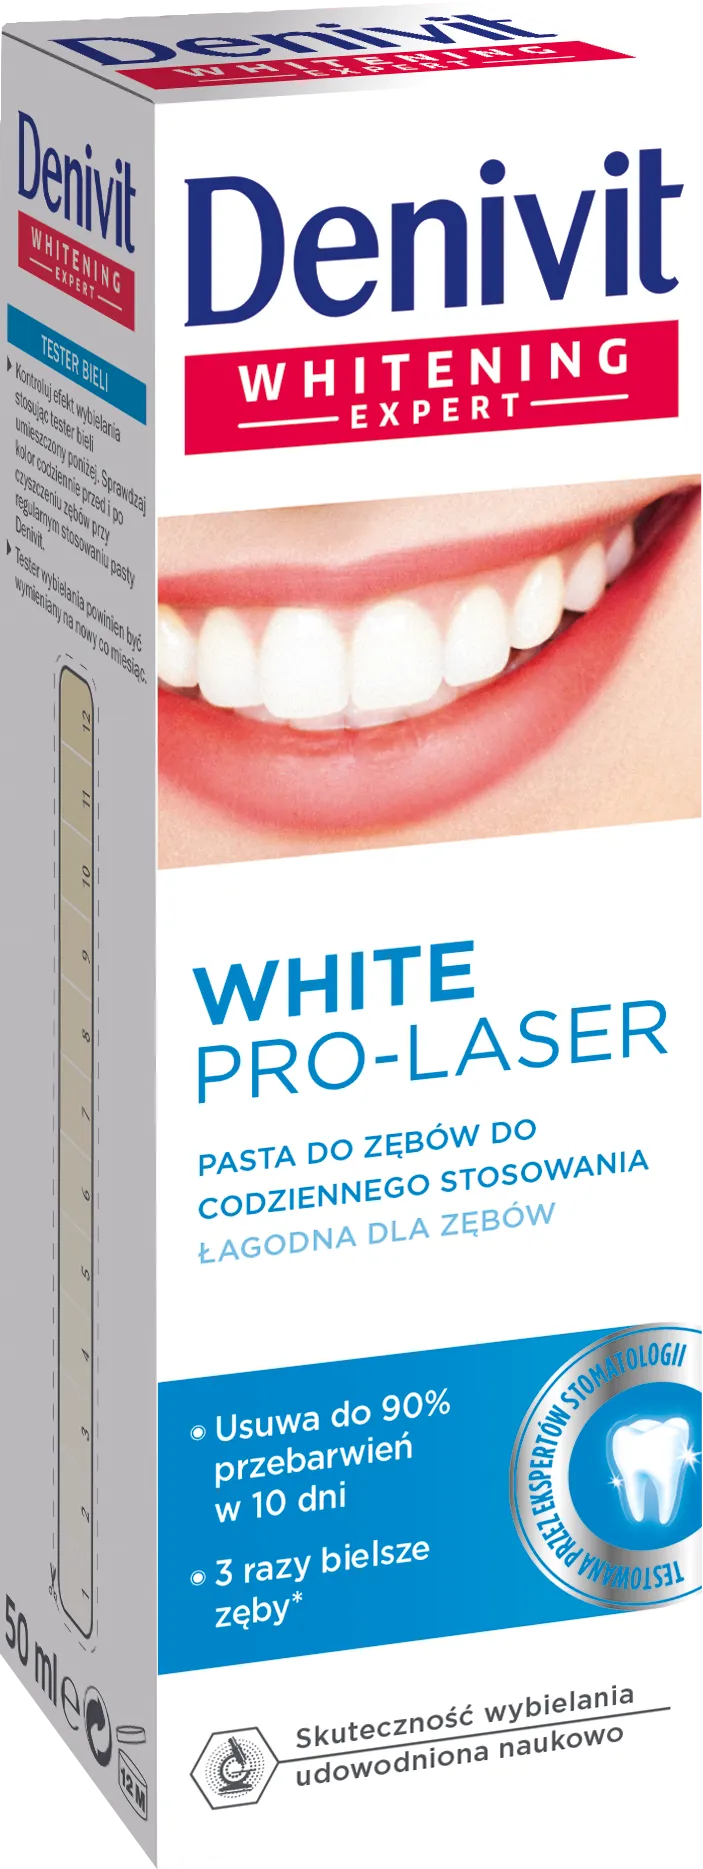 Denivit Whitening Expert White Pro-Laser Pasta do codziennego stosowania, 50 ml